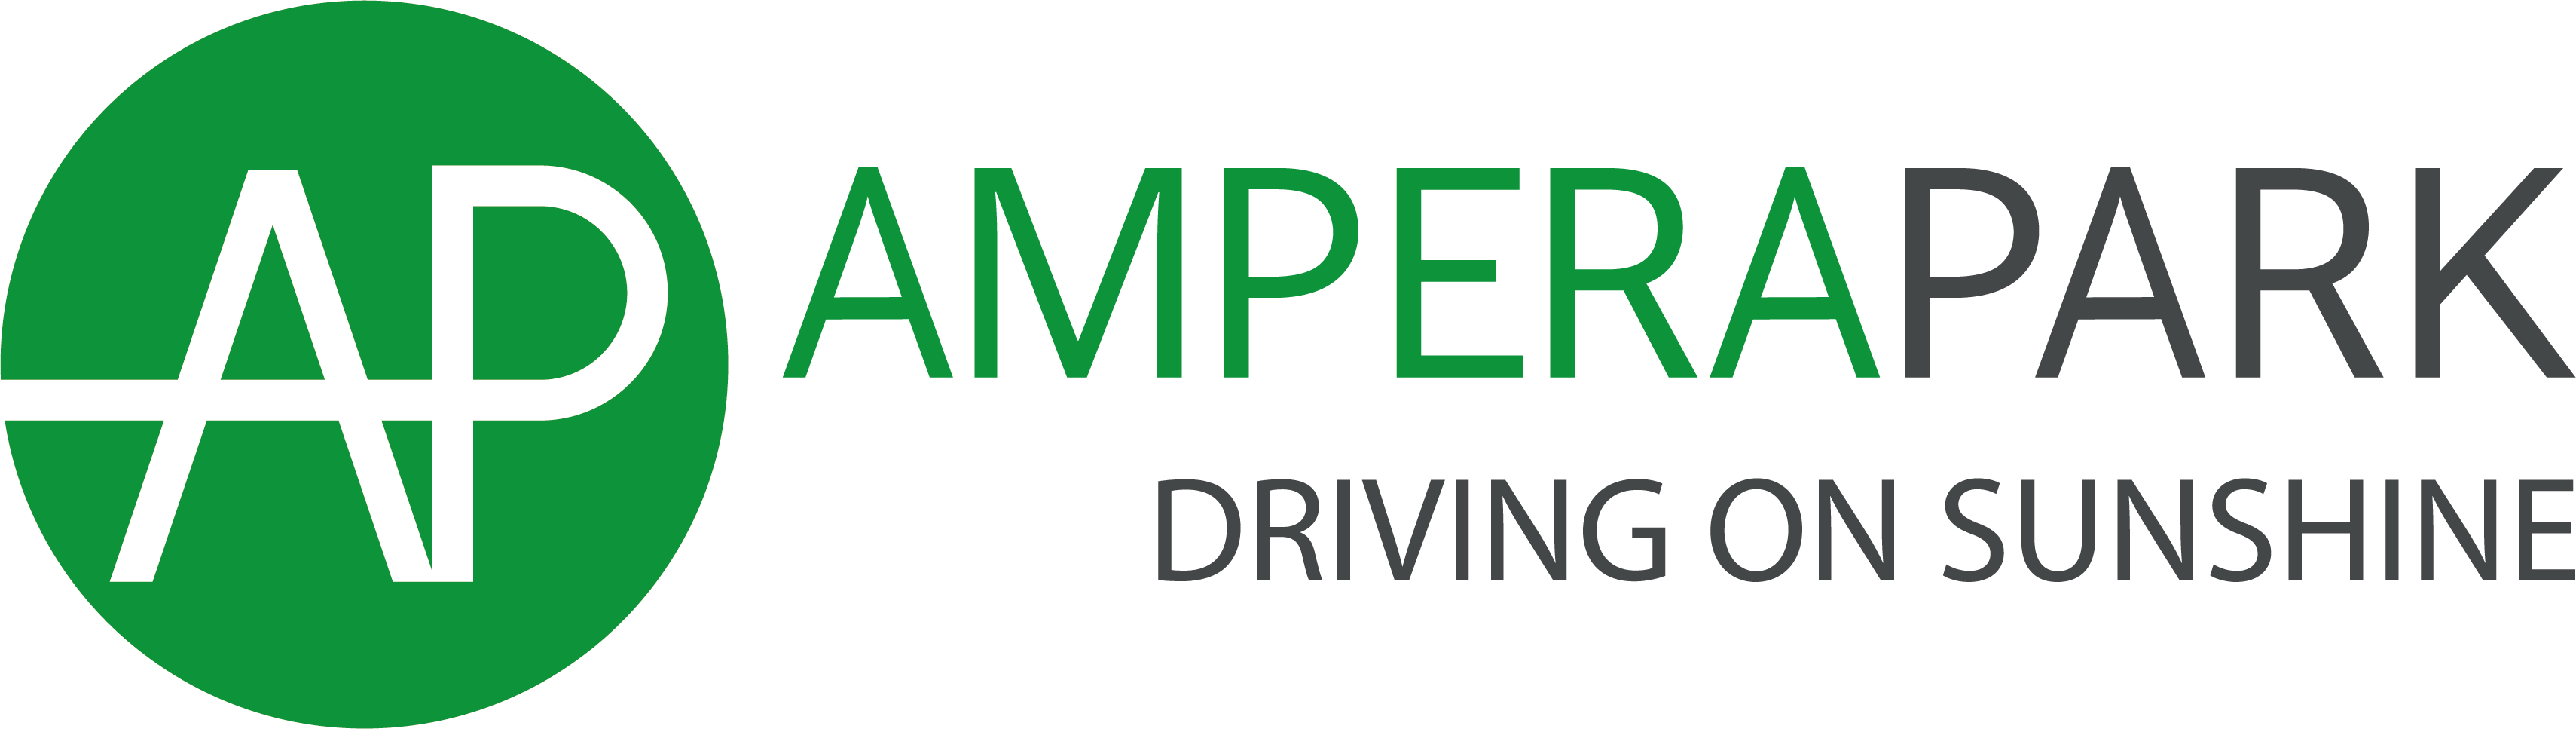 Het logo van AmperaPark